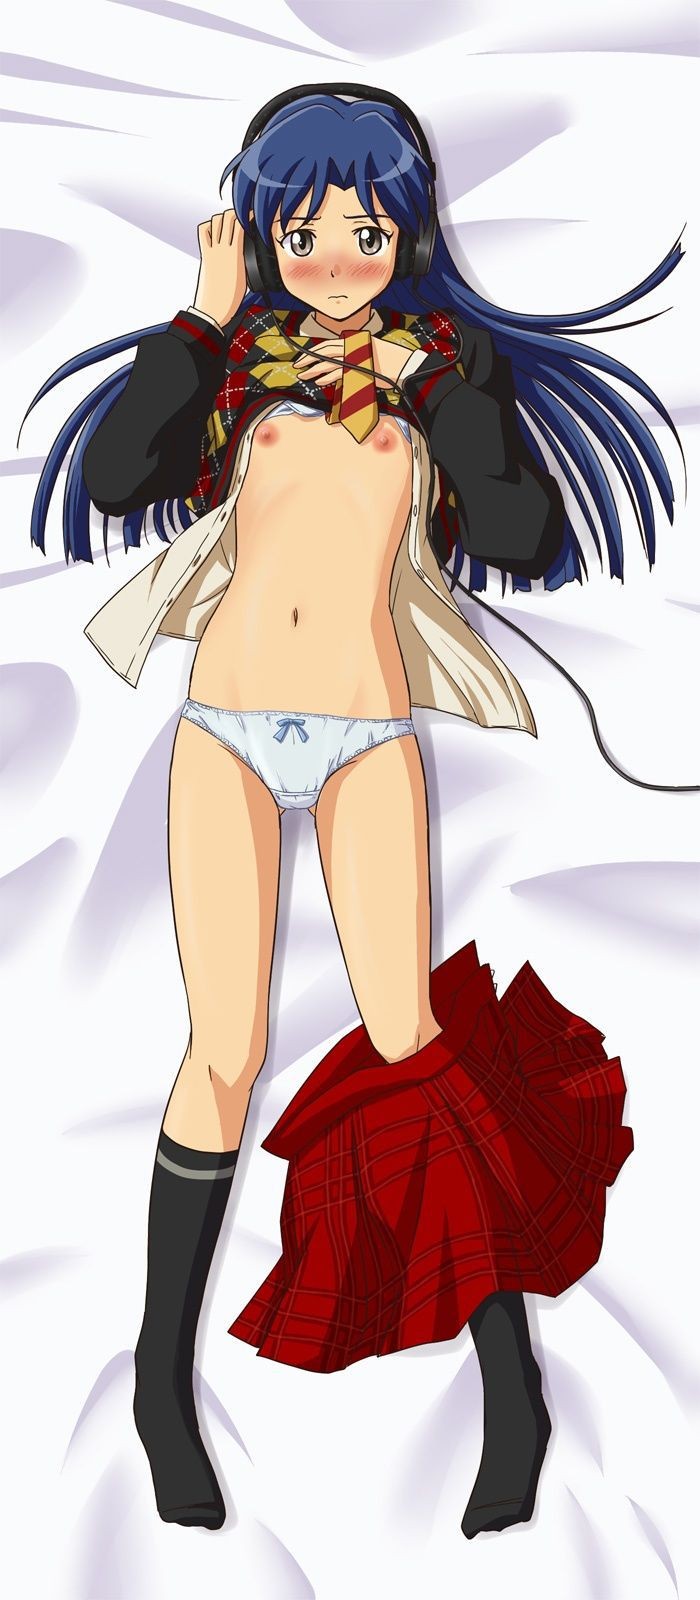 Pauzudo Erotic Image Of The Sexy Pose Desperately Of Kisaragi Chihaya! 【Idol Master】 Actress